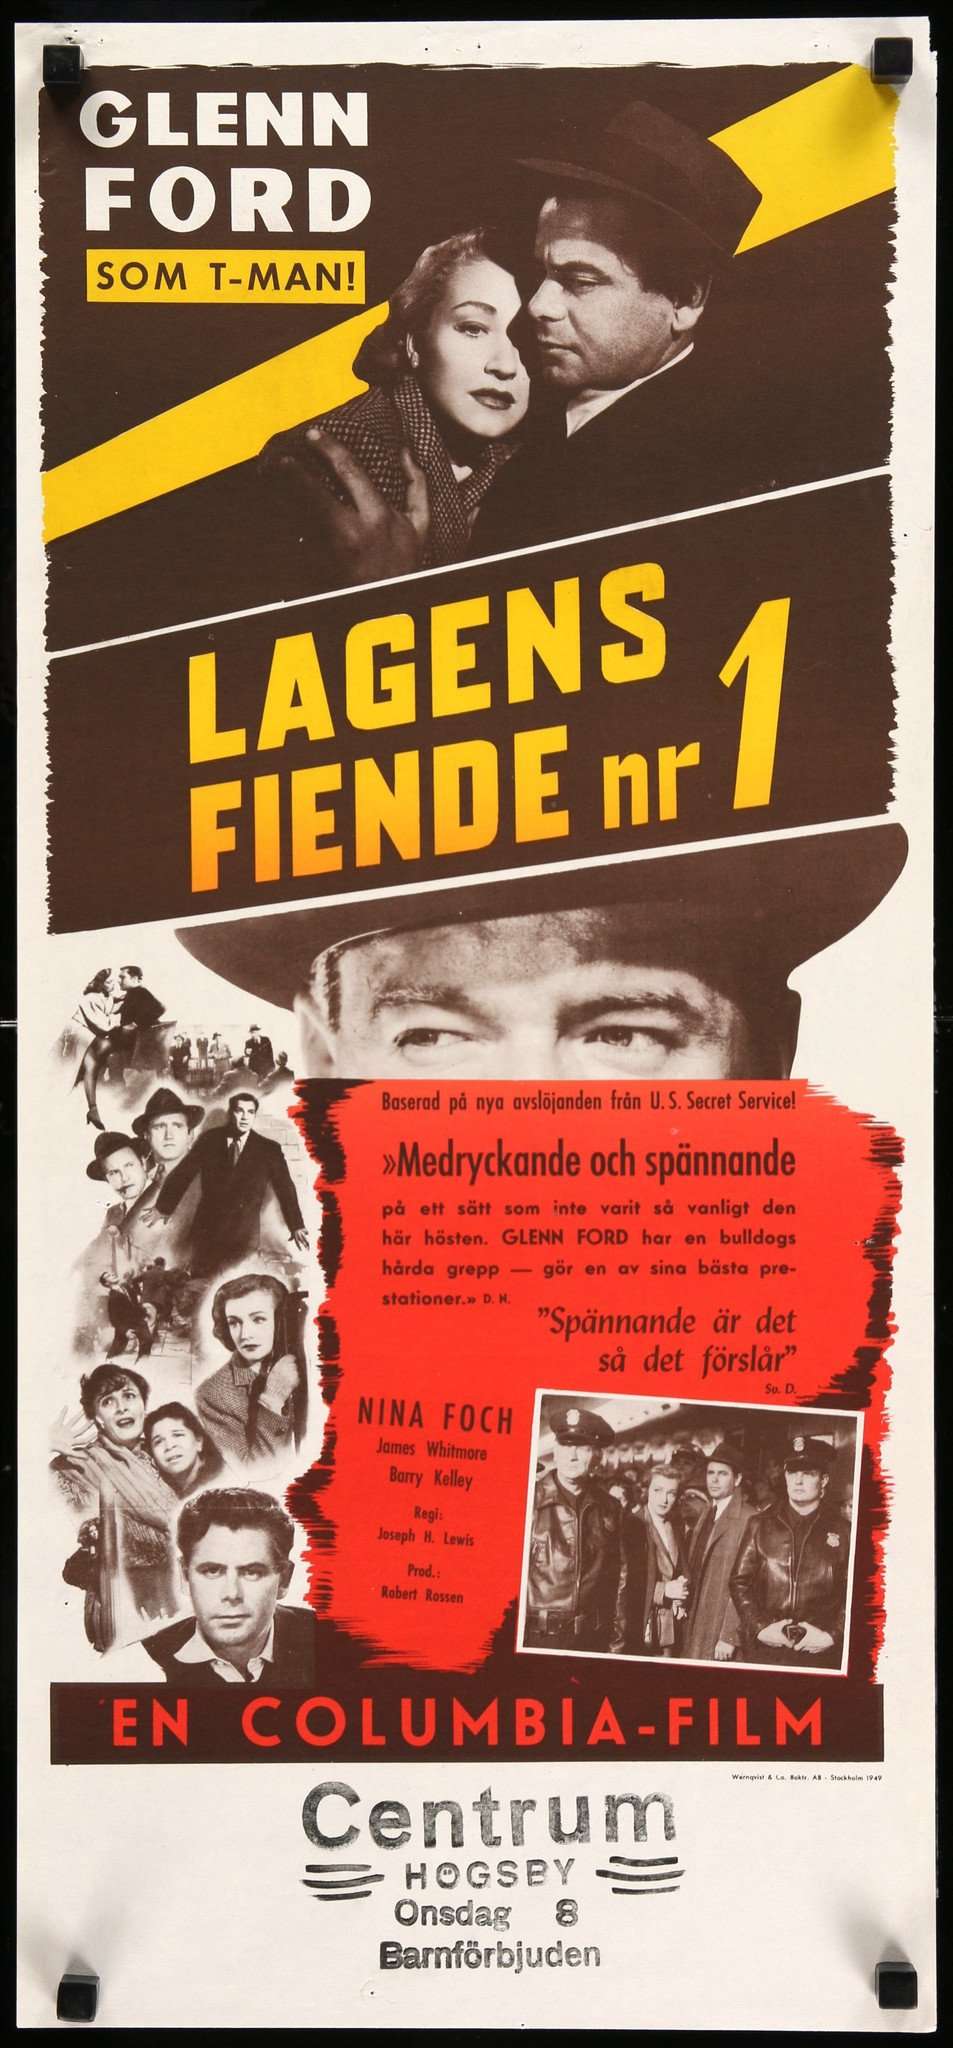 Undercover Man (1949) original movie poster for sale at Original Film Art